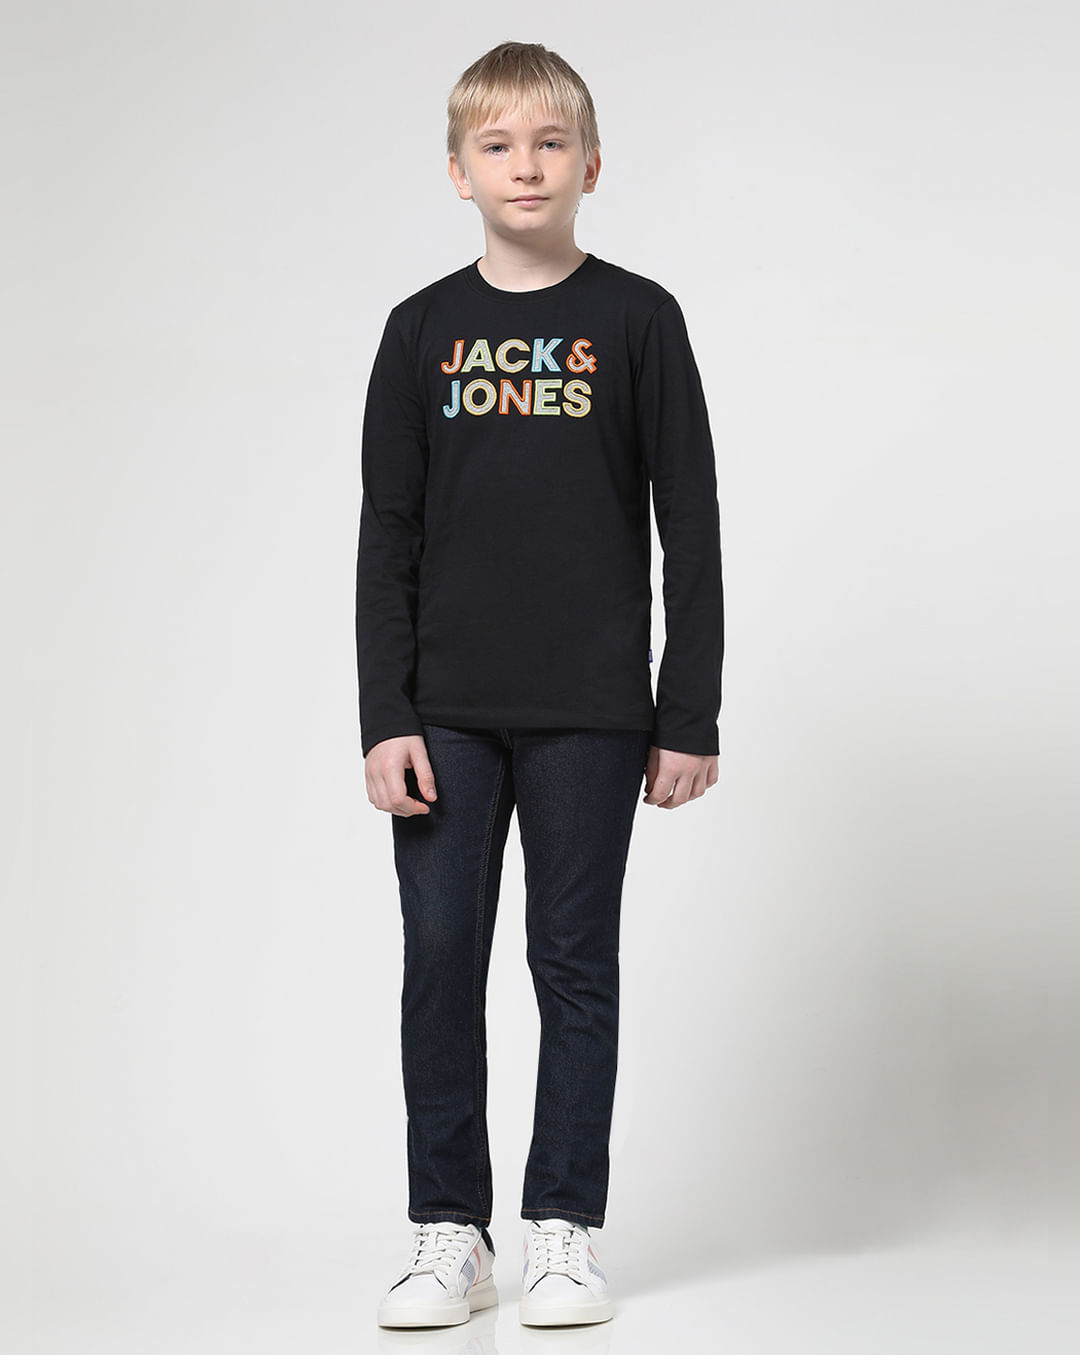 Jack & Jones Small chest logo long sleeve t-shirt